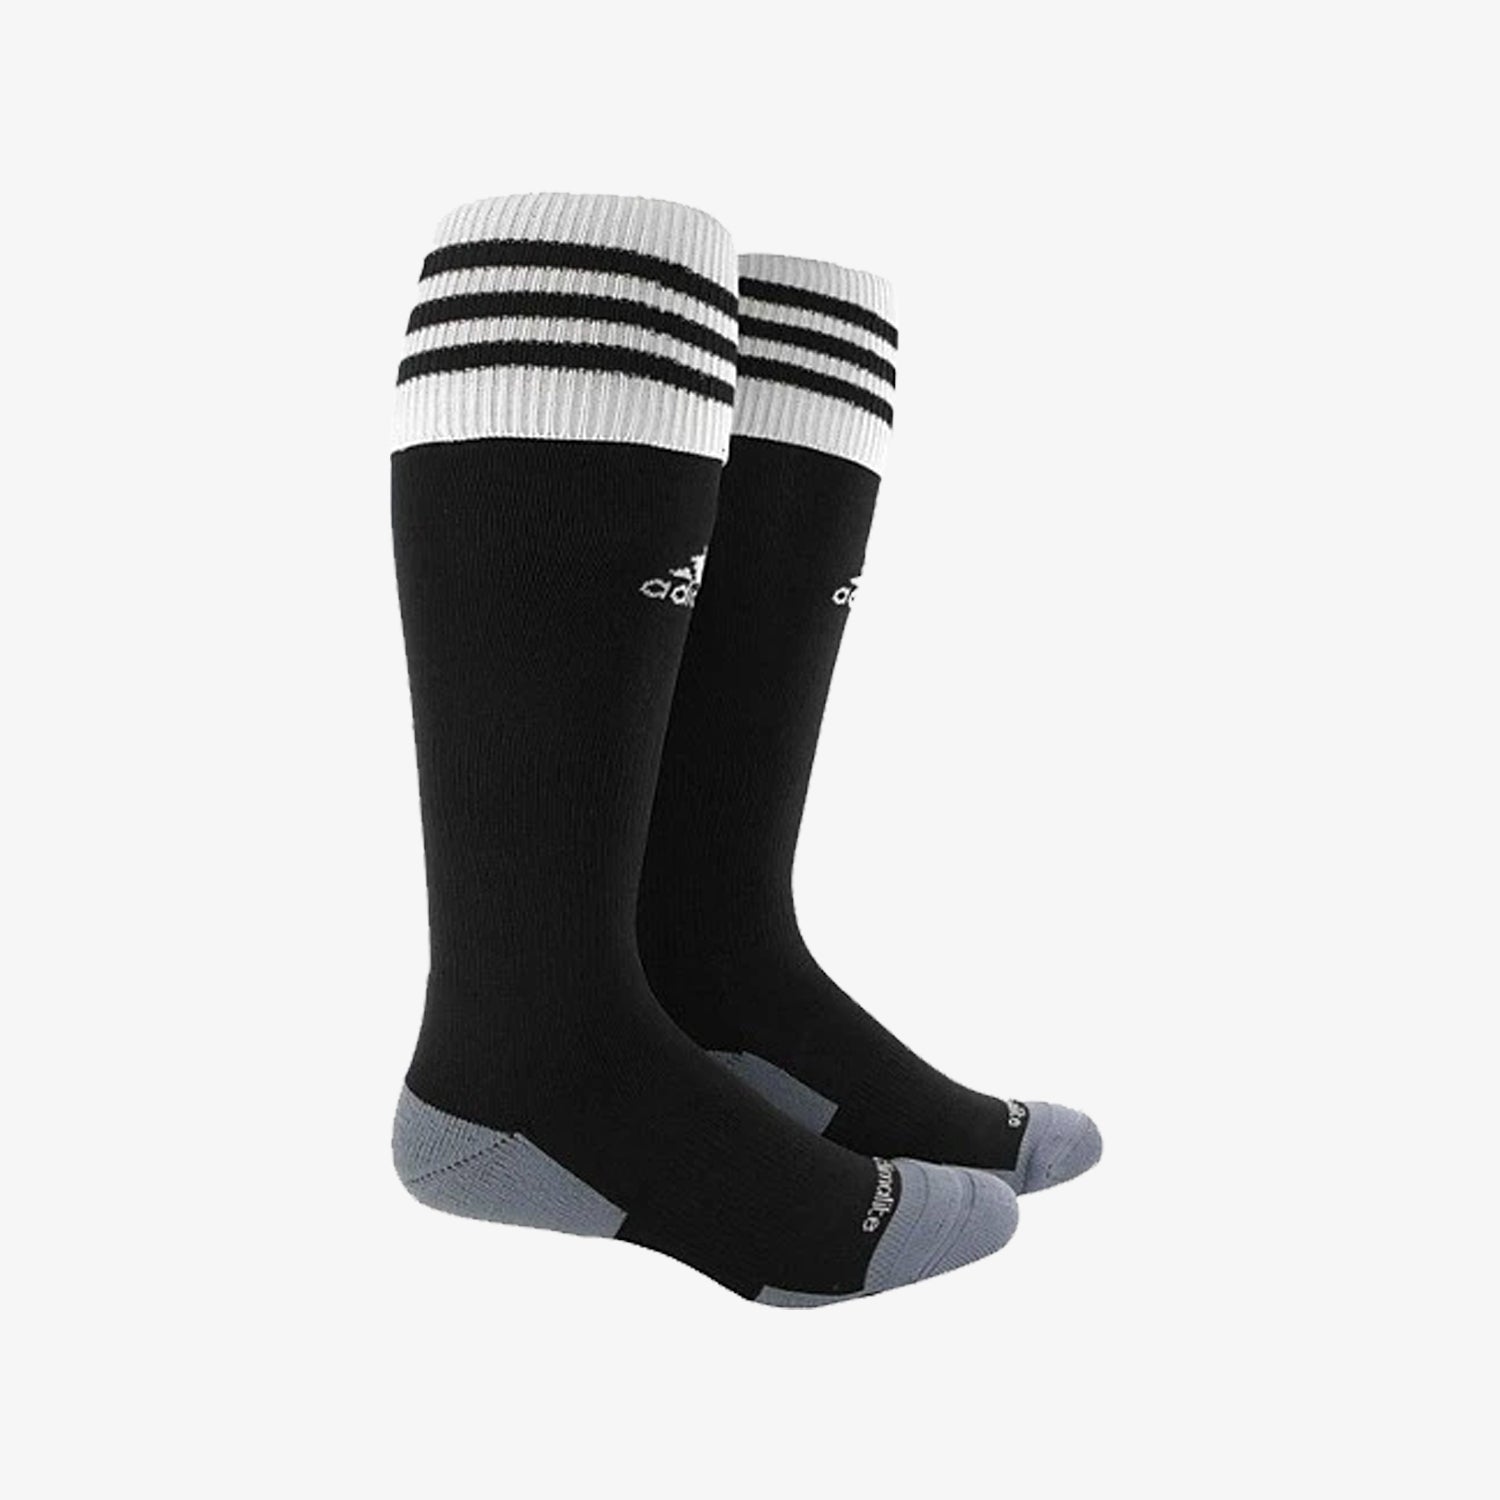 Copa Zone Cushion 2.0 Soccer Socks Small - Black/White